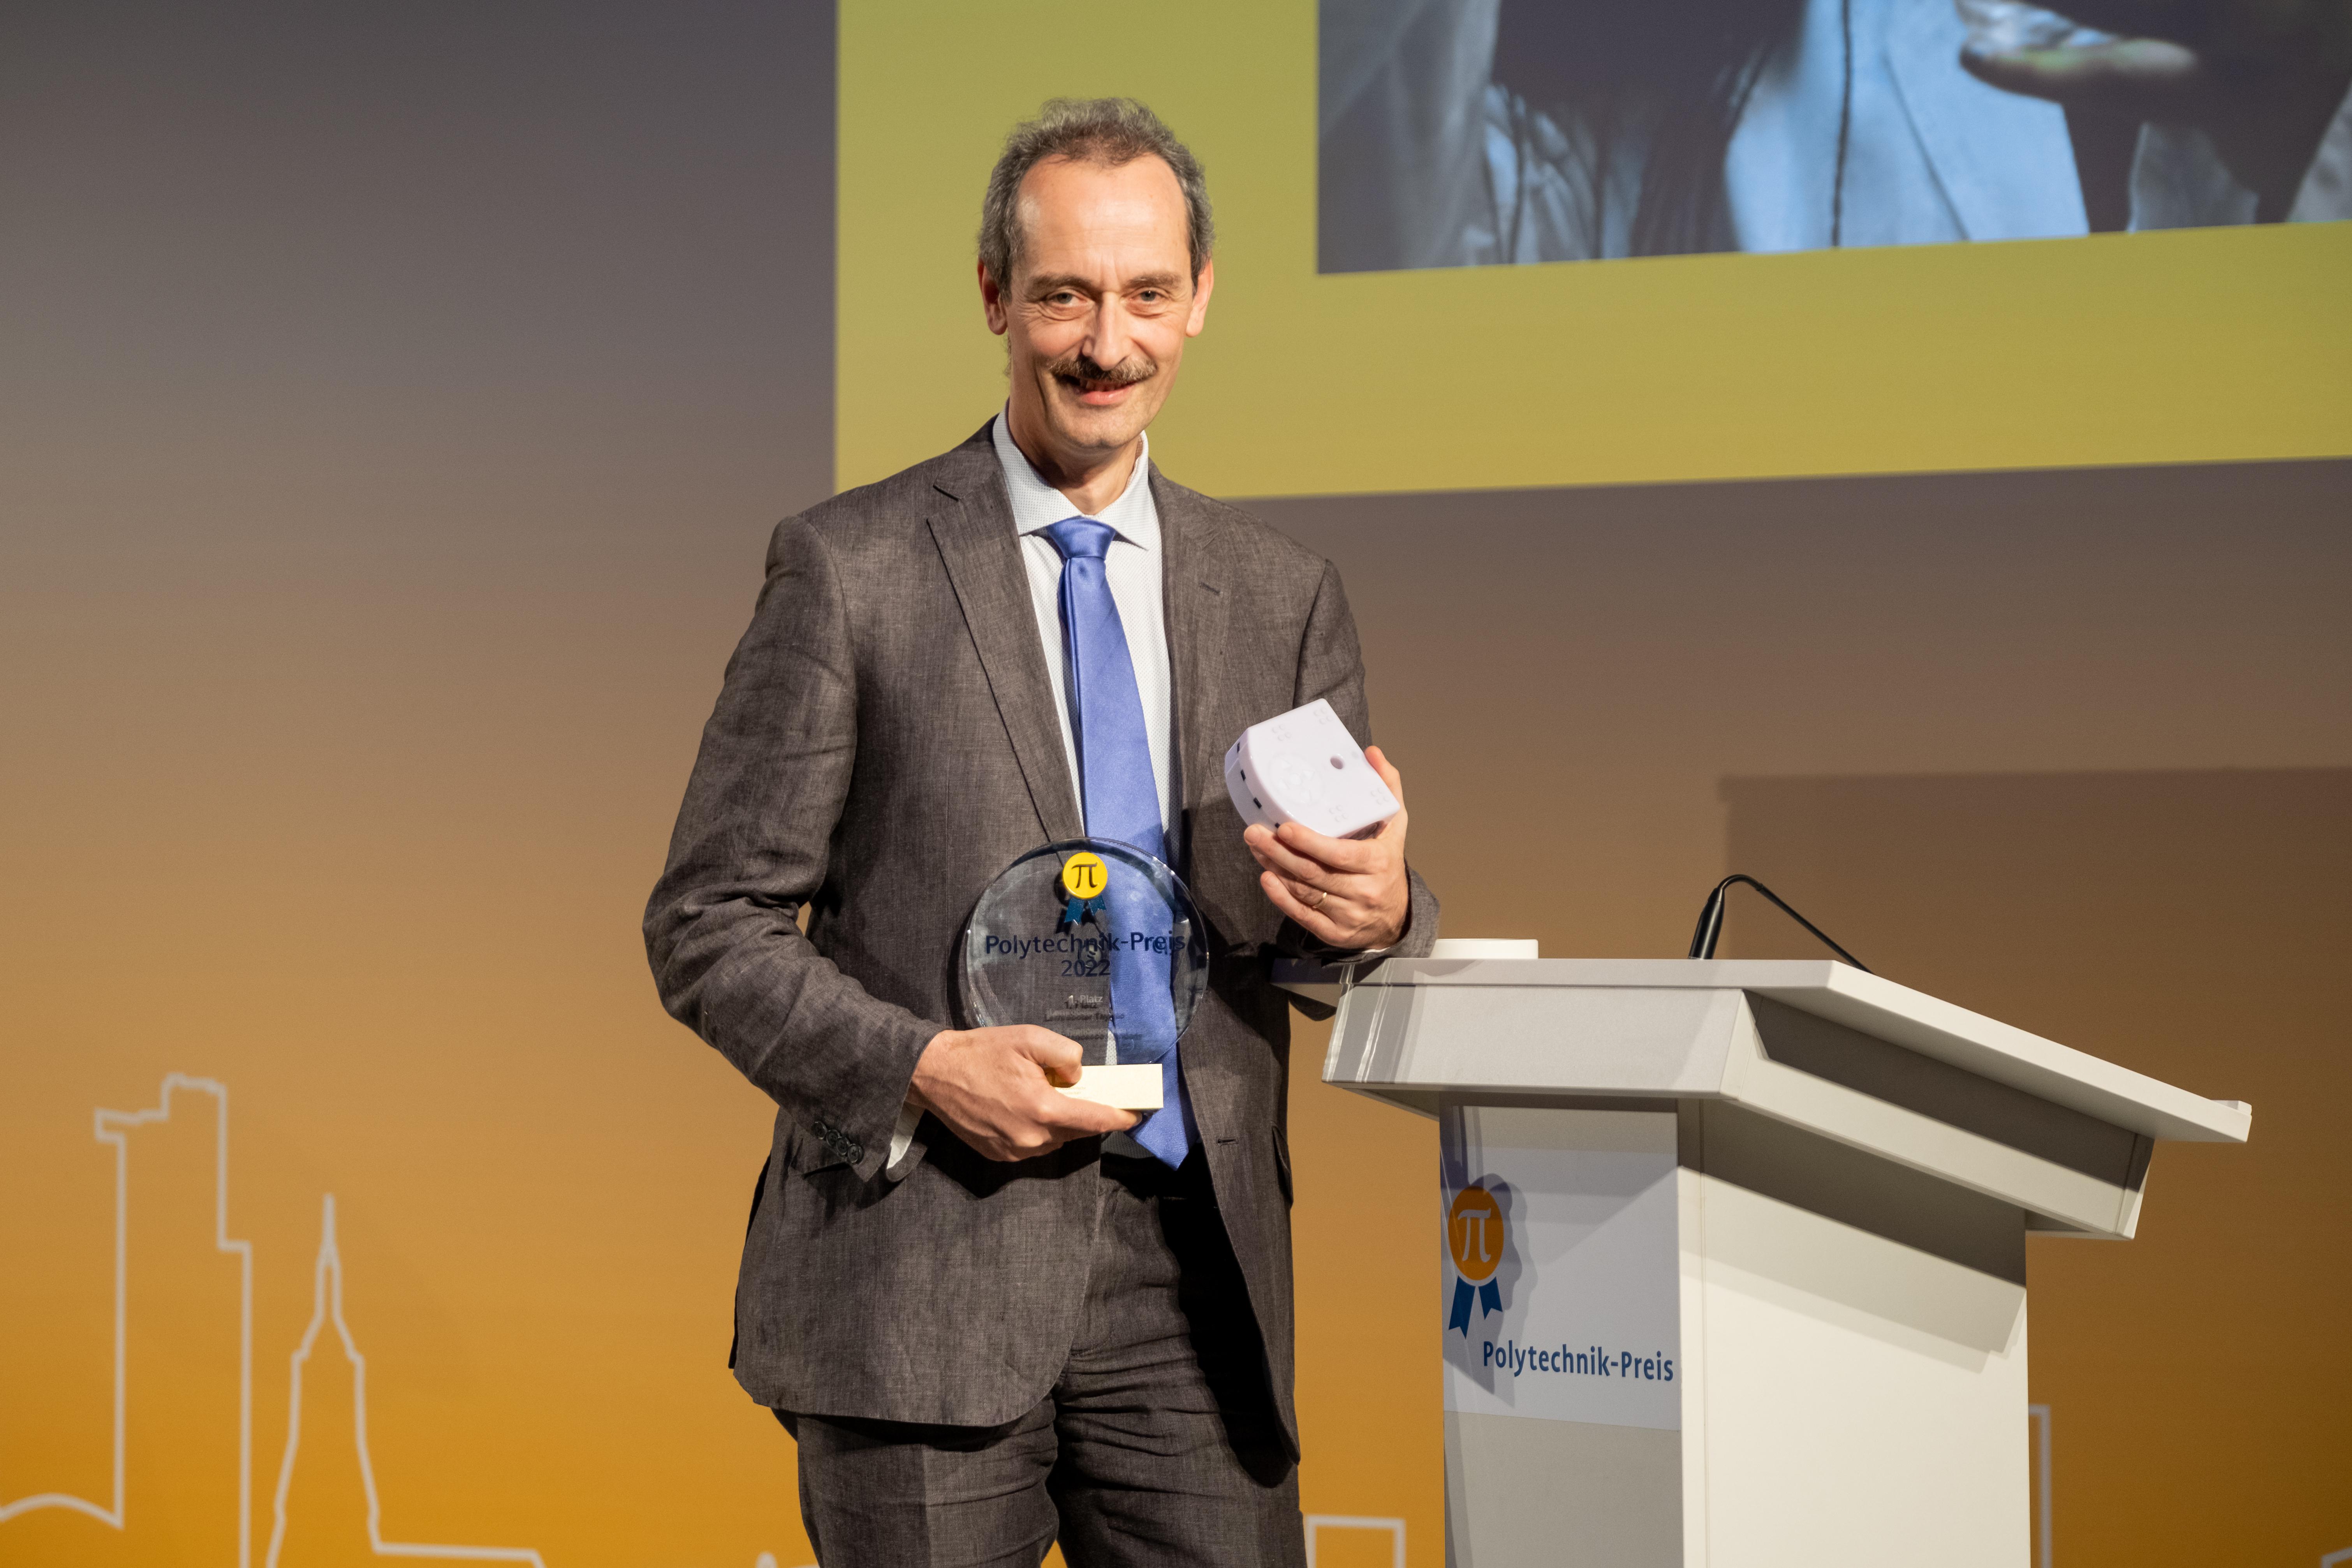 Francesco Mondada receives the Polytechnik-Preis 2022